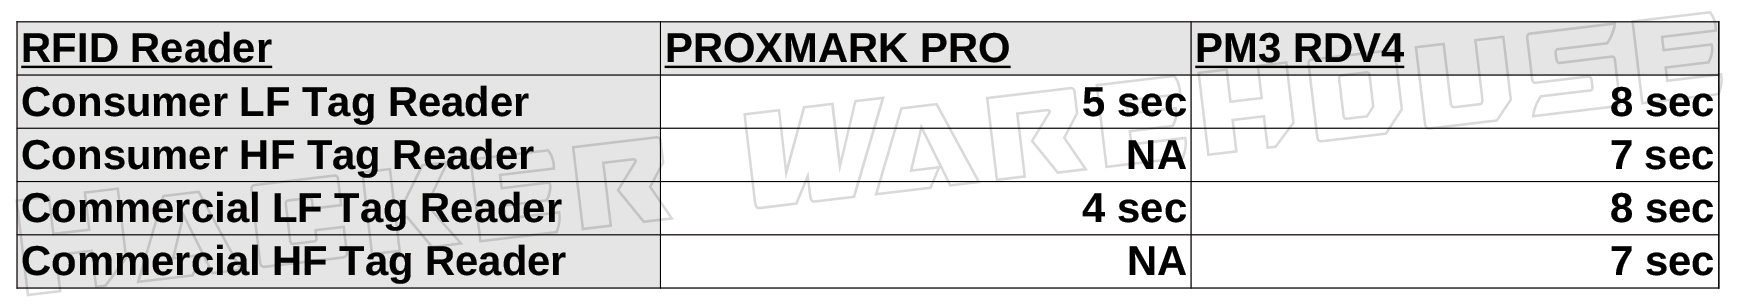 ProxmarkPro and Proxmark3 RDV4 Card Read Time Chart